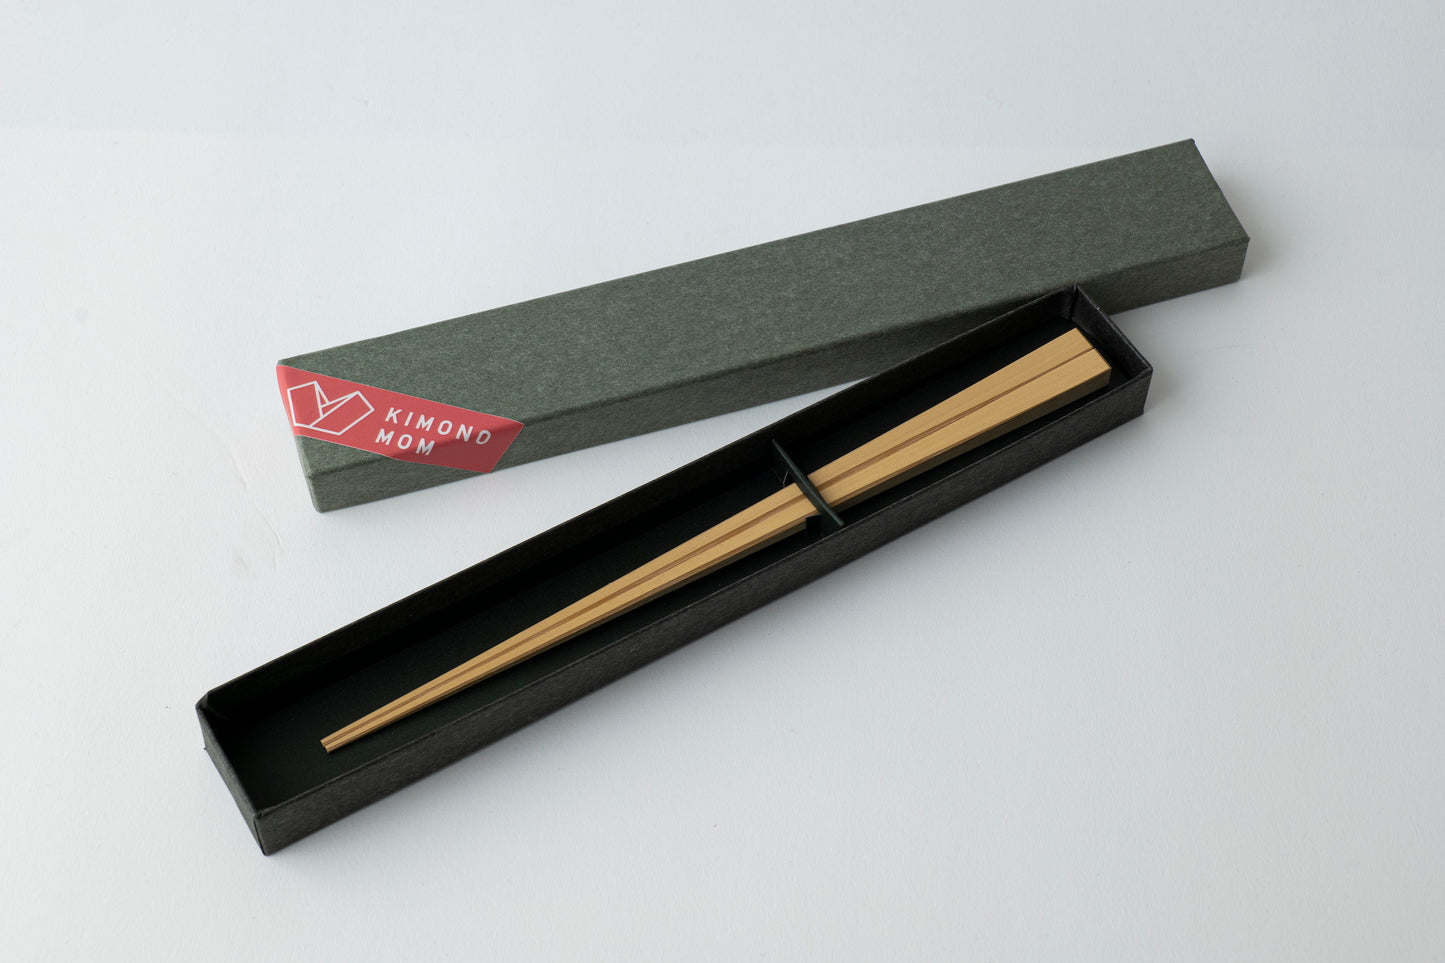 Kimono Mom Donabe (Small) & 2 pairs of Bamboo Chopsticks & Bamboo Chopstick Rest (5pcs) : Cherry Blossom Set